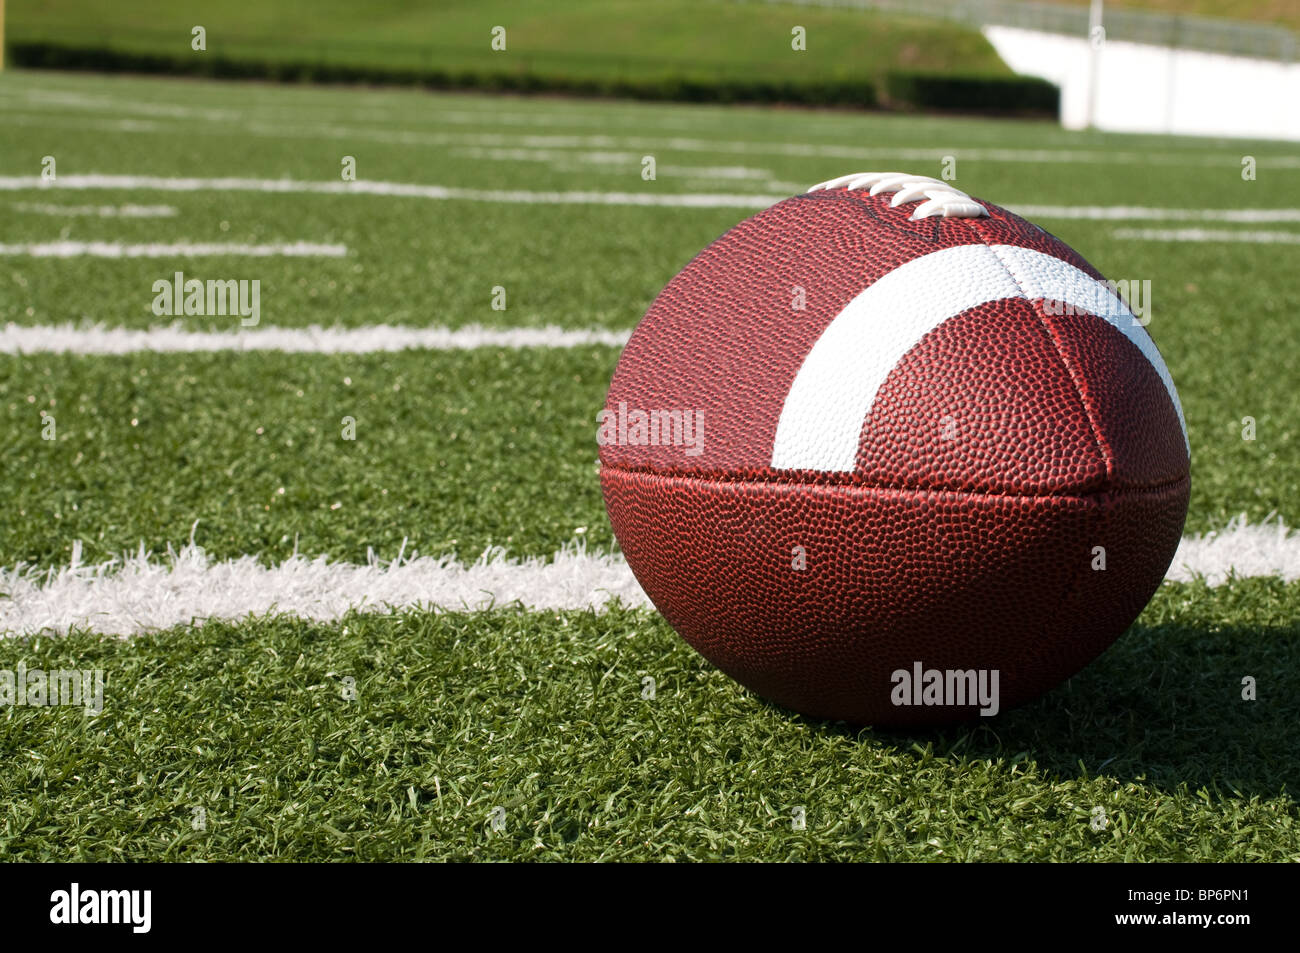 Closeup of American football on field. Stock Photo